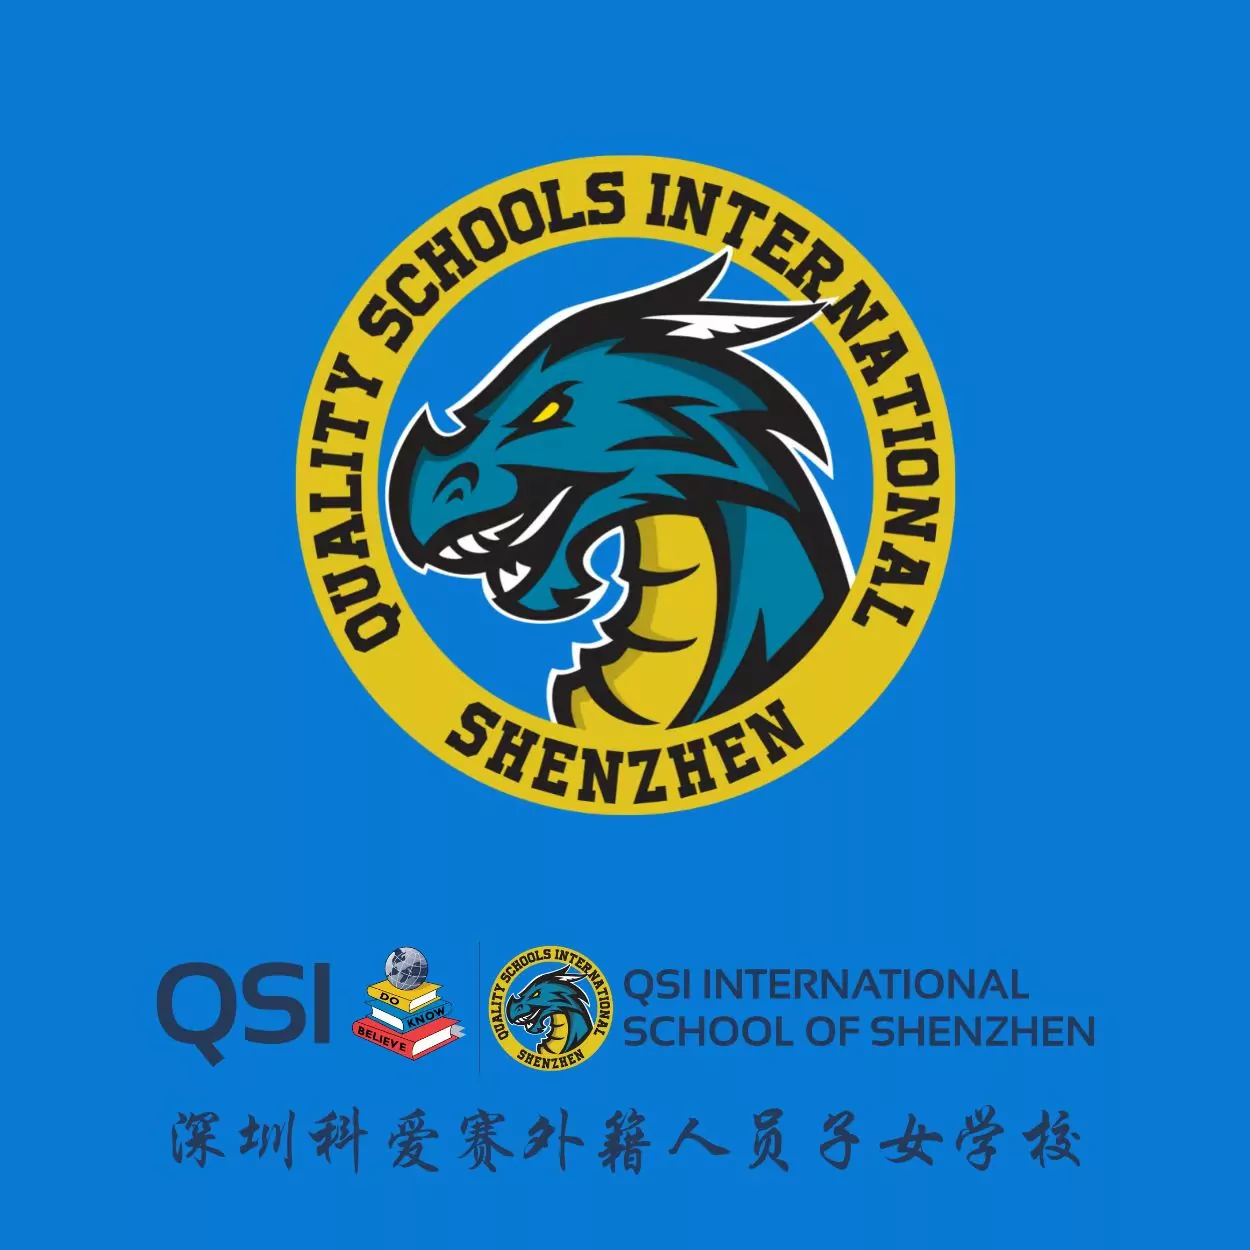 Featured image for “QSI International School of Shenzhen”